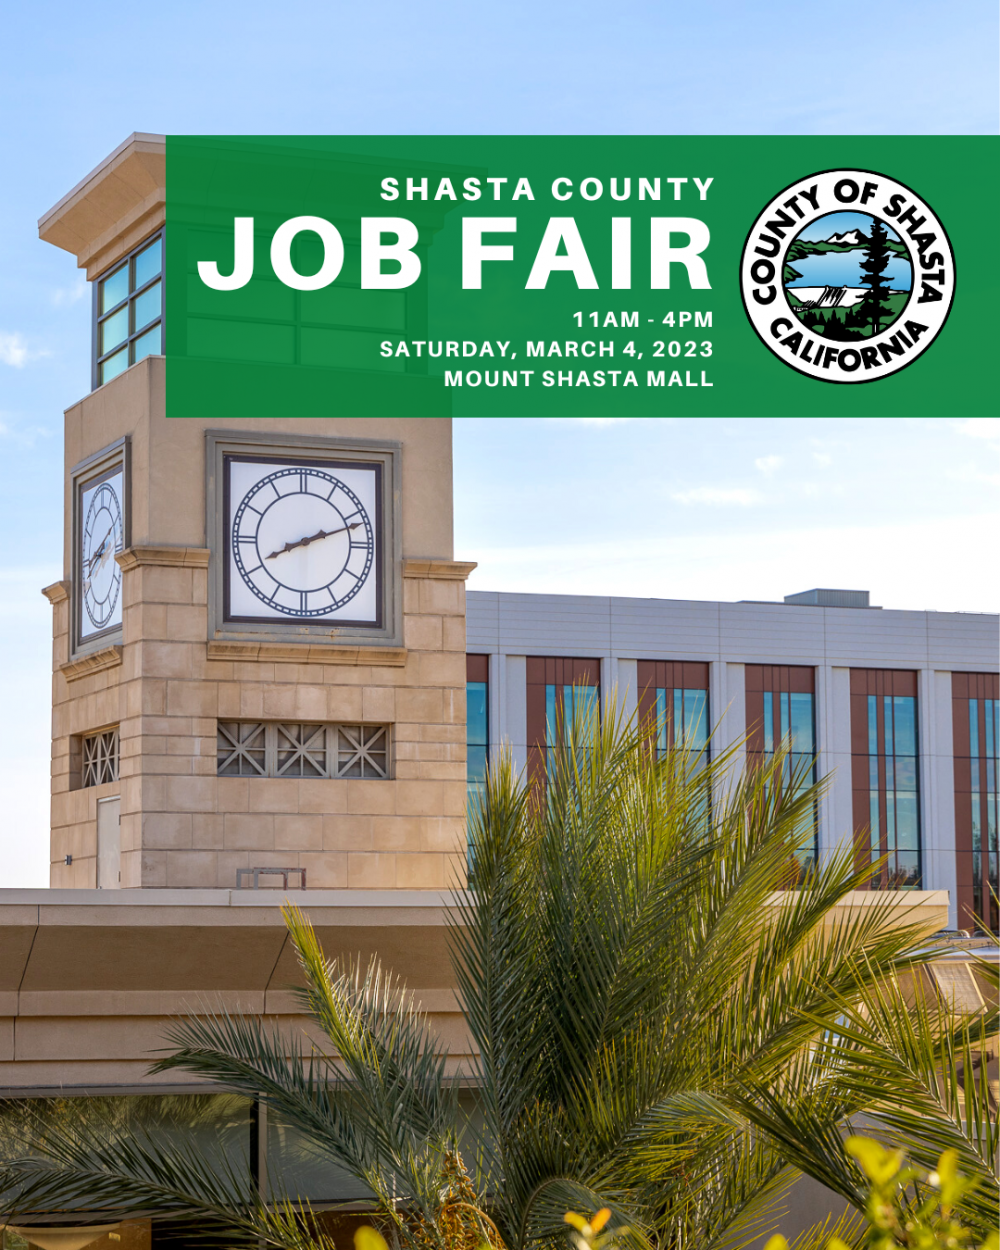 Job Fair on March 4, 2023 Shasta County California